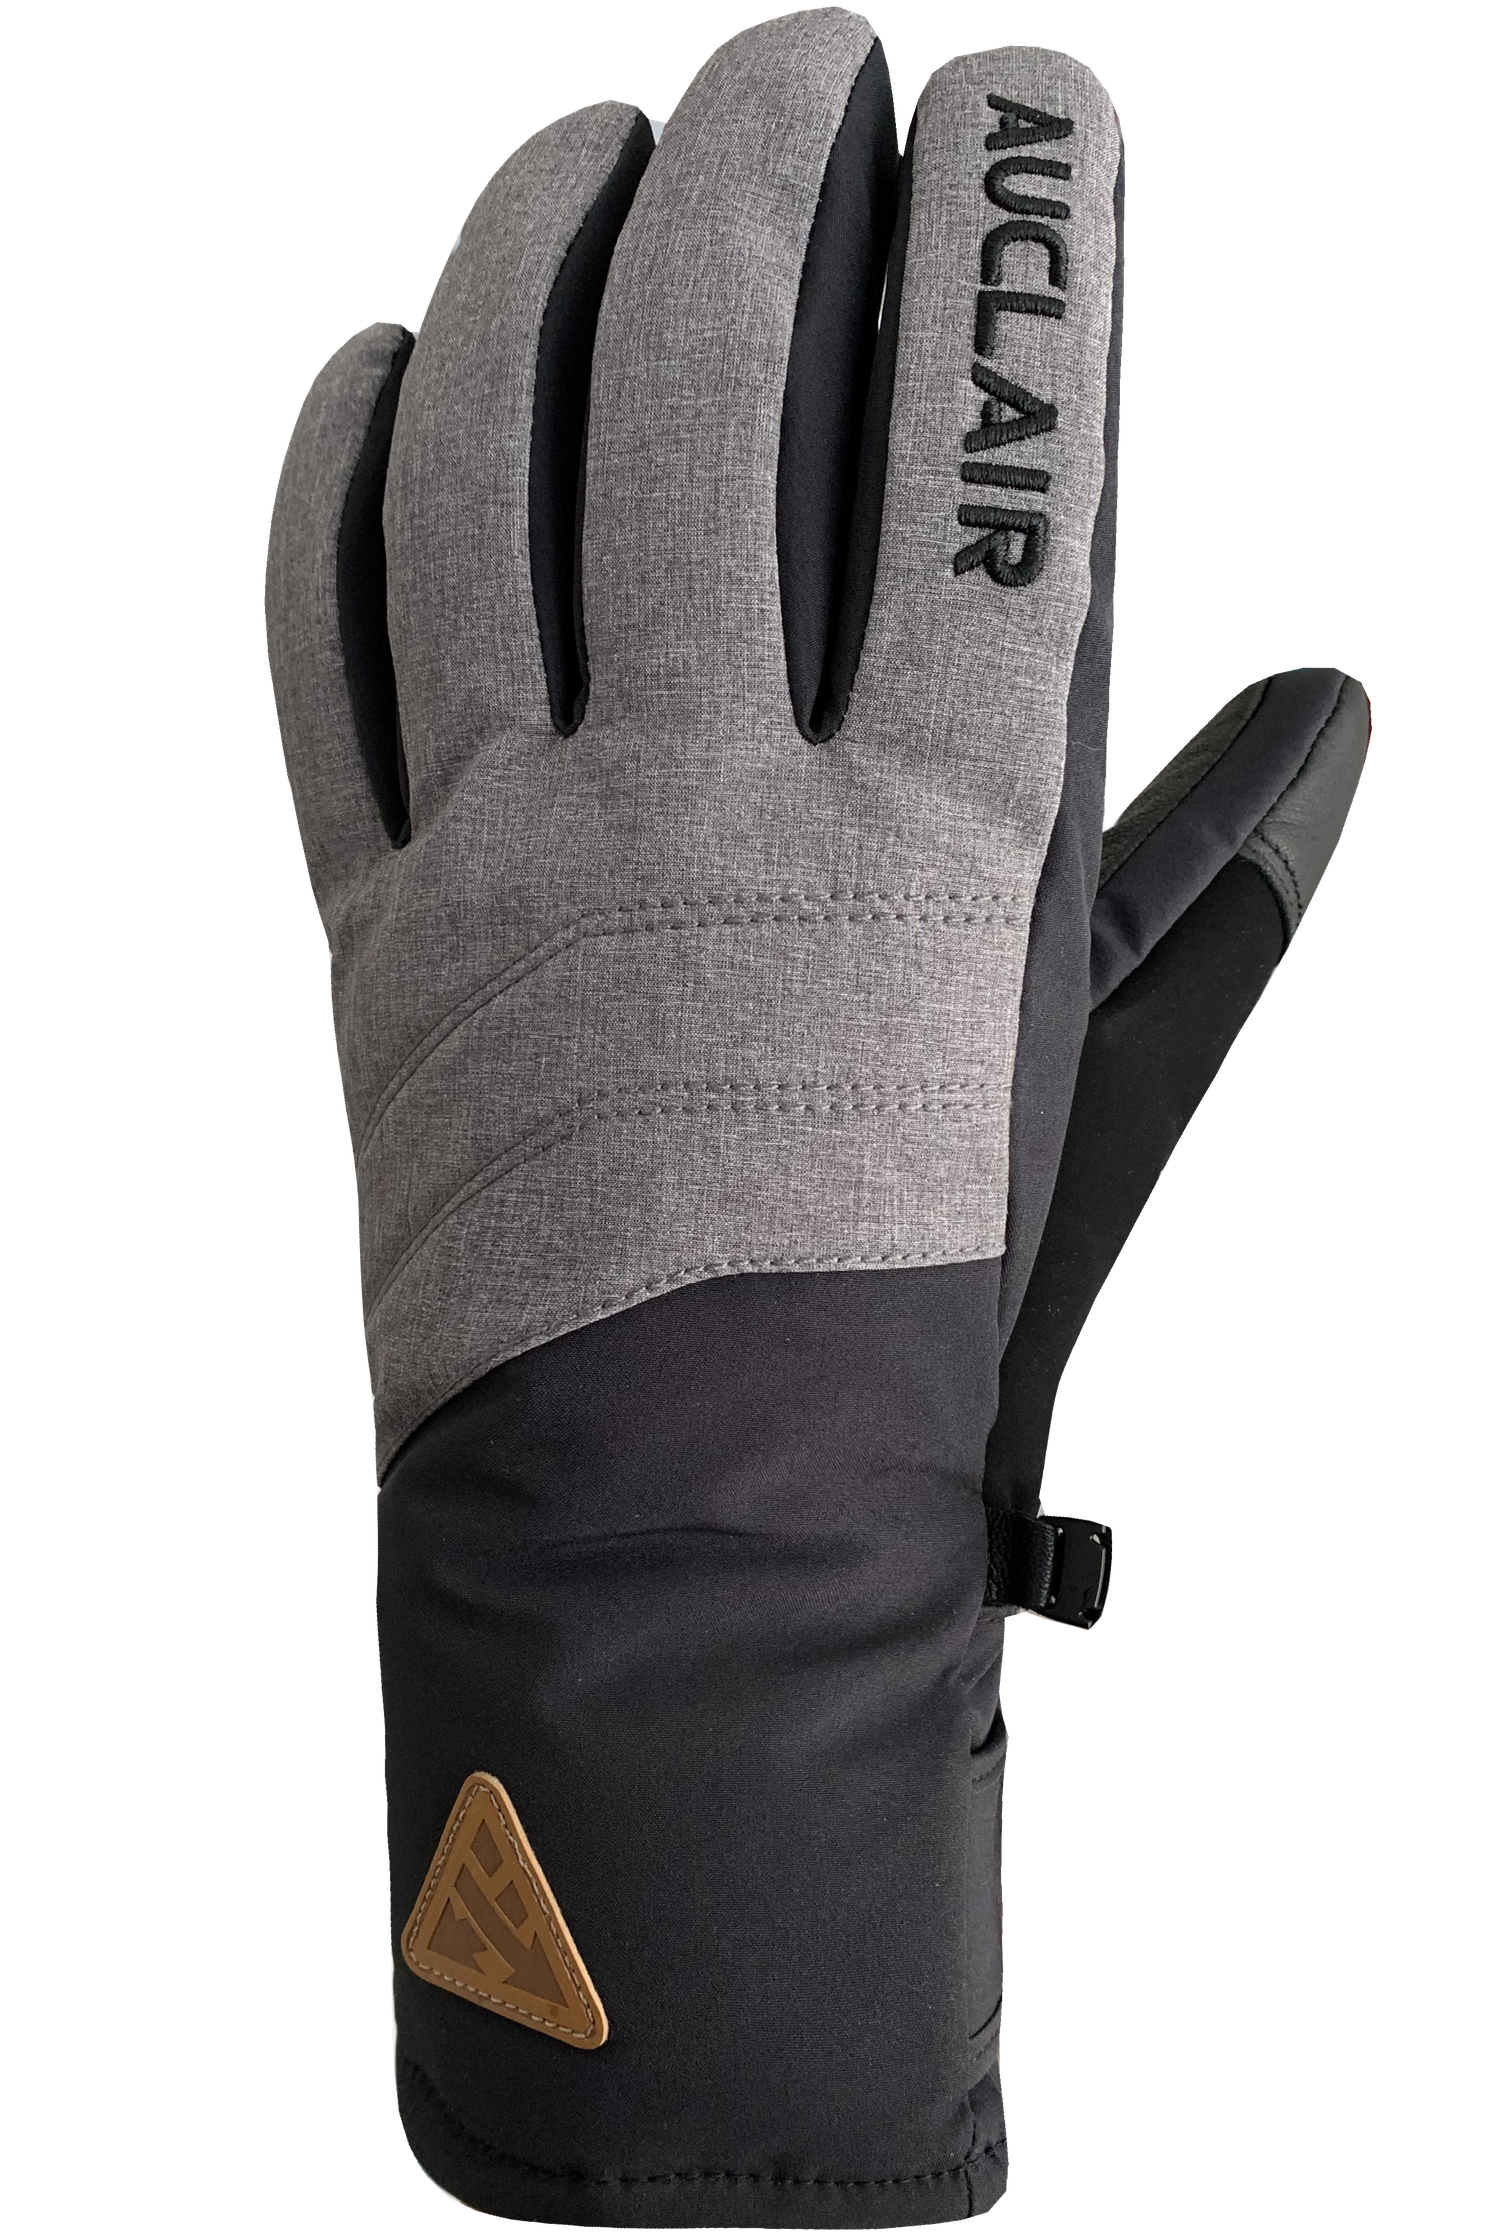 Avalanche Gloves - Adult, Black/Grey